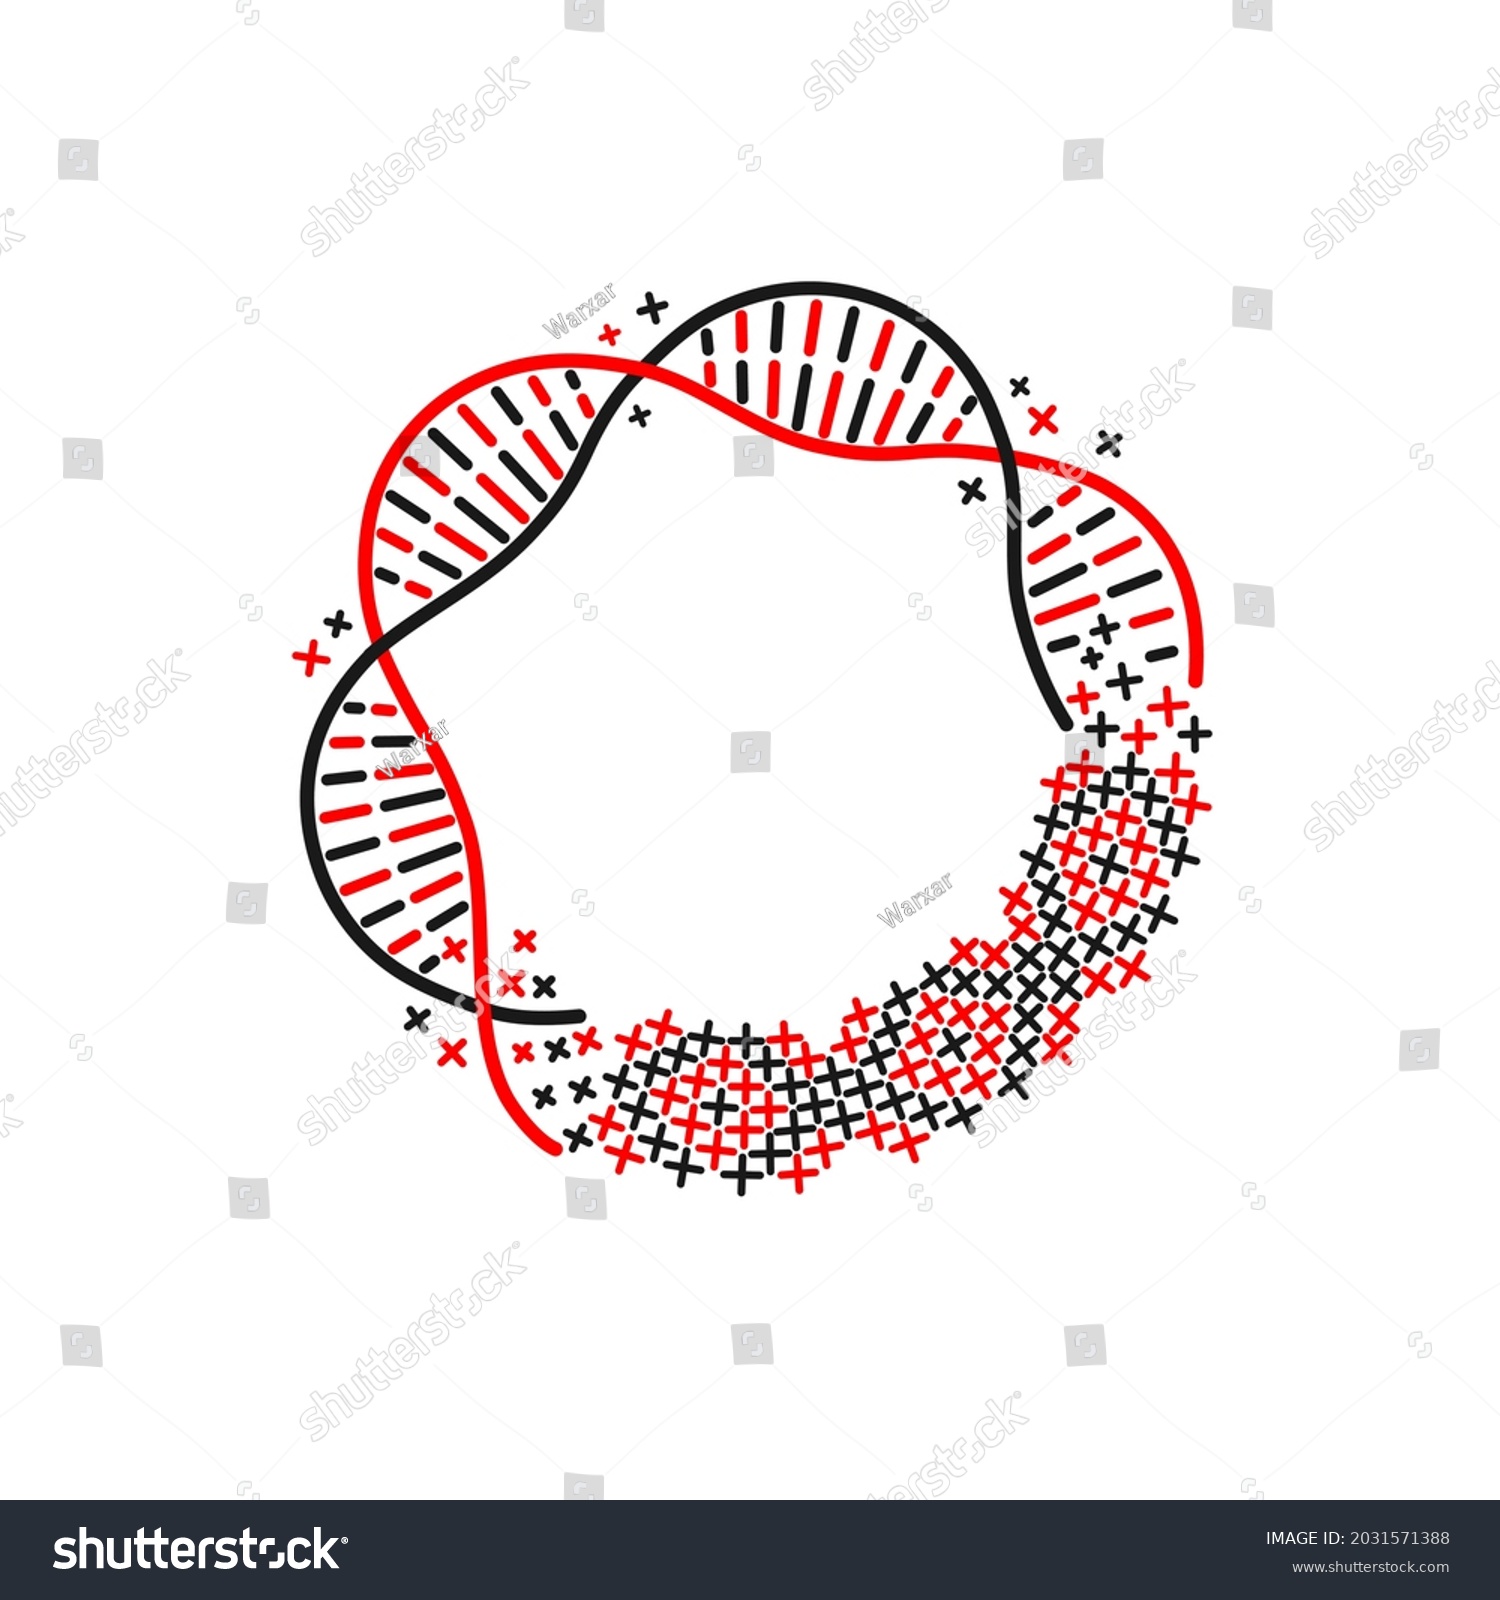 SVG of DNA molecule, Chromosomes ideas, cross stitch, dna helix molecule, genetic engineering, integration, puzzle, embroidery, wreath, vyshyvanka day, Ukraine tradition, vishivanka  svg